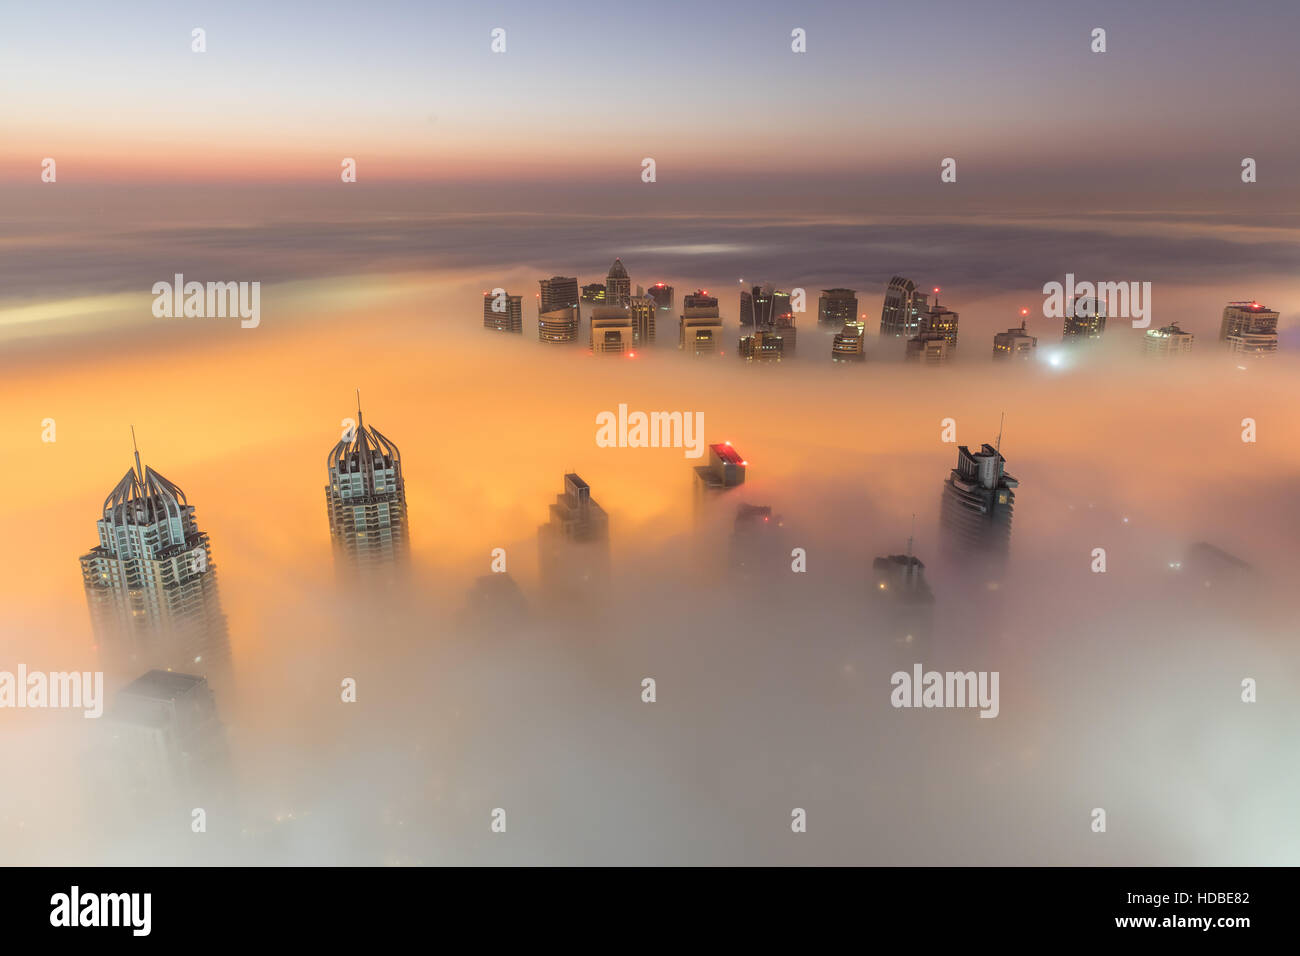 Rare winter morning fog blanketing Dubai skyscrapers. Dubai, UAE. Stock Photo